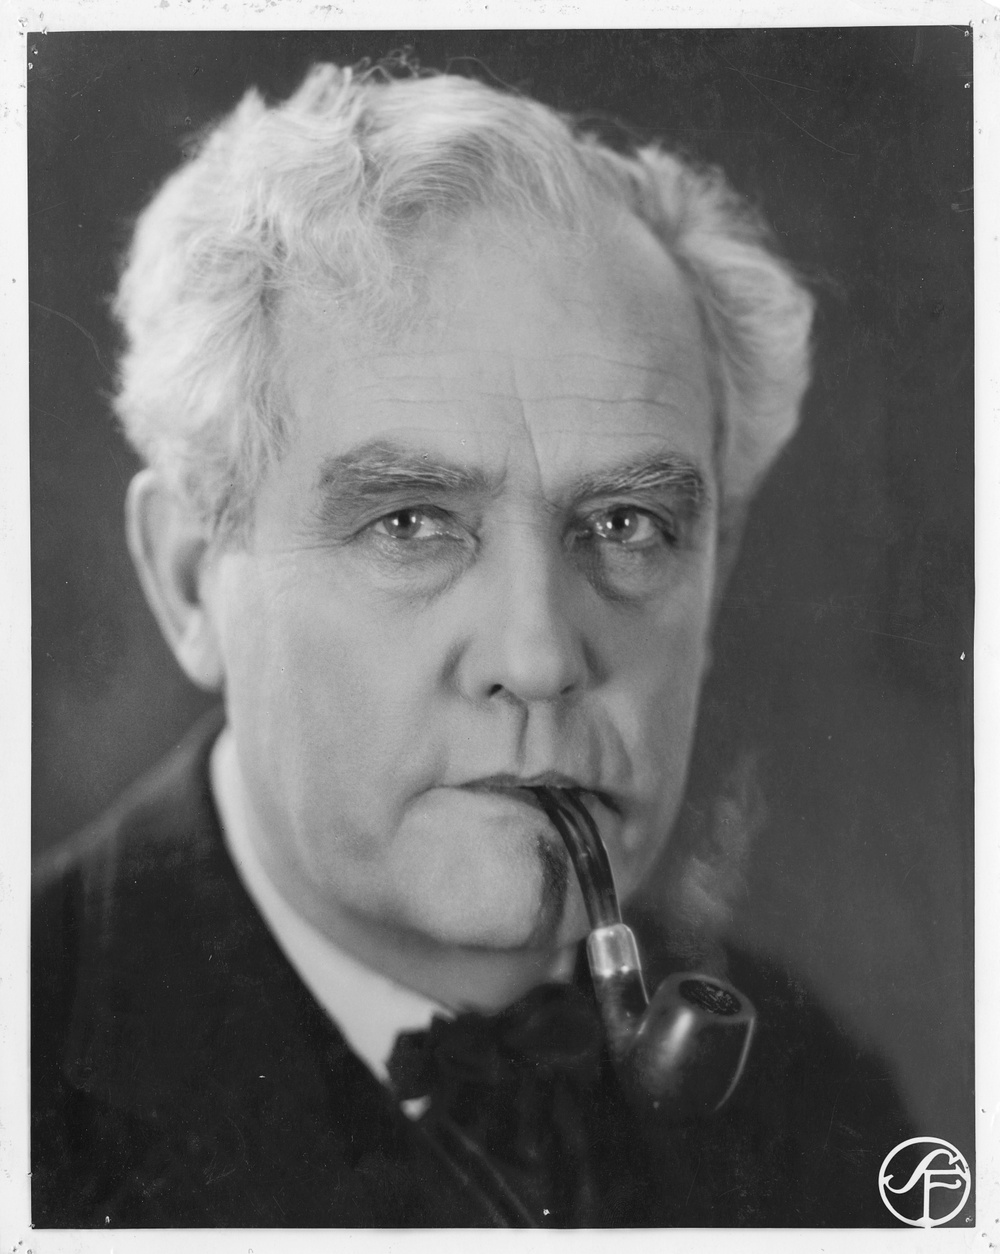 Victor Sjöström - creator of several masterpieces during the silent era. Photo:  ©SF Studios